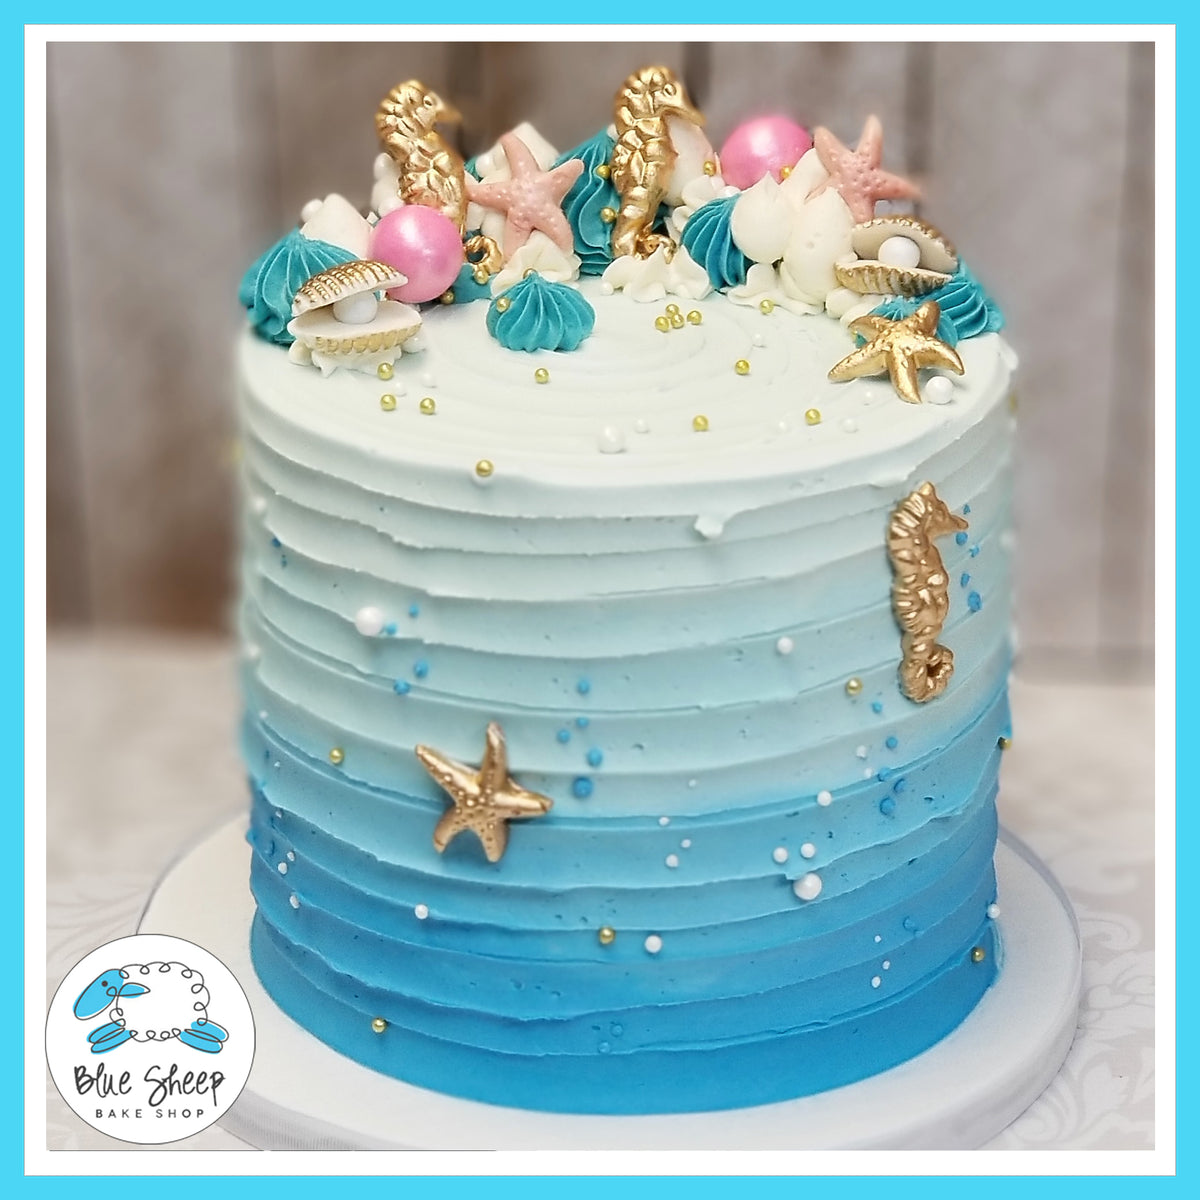 Under The Sea Birthday Cake Nj Blue Sheep Bake Shop 2313